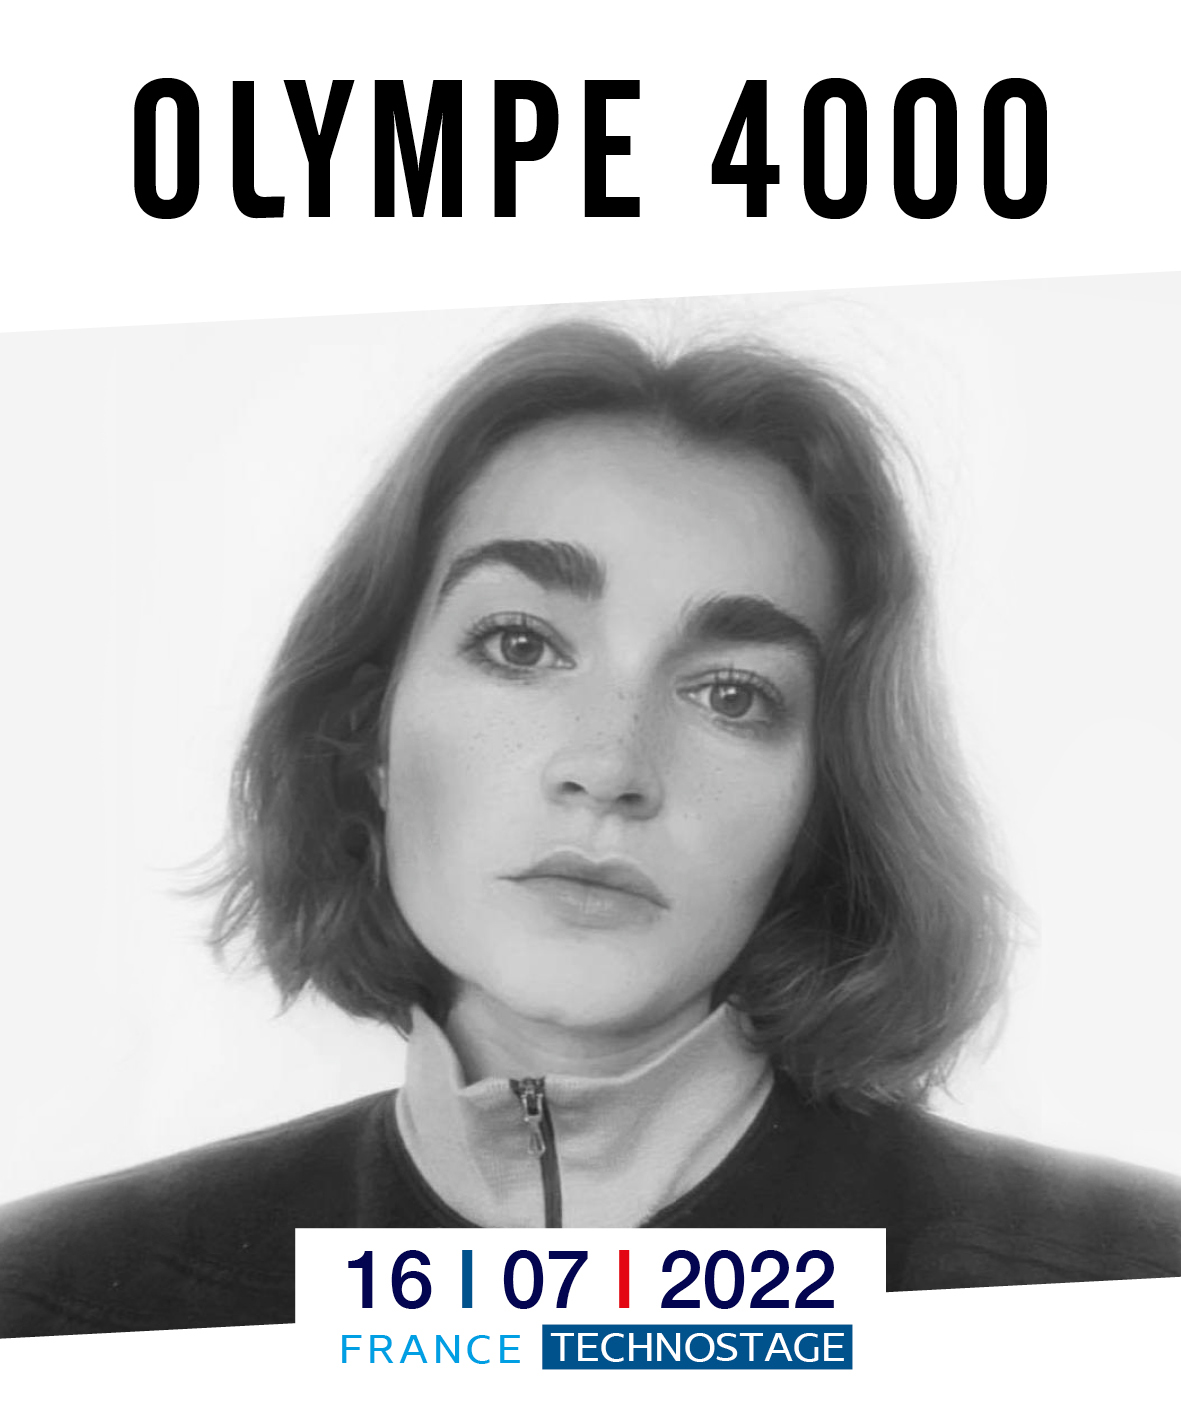 Olympe4000-Vignette13